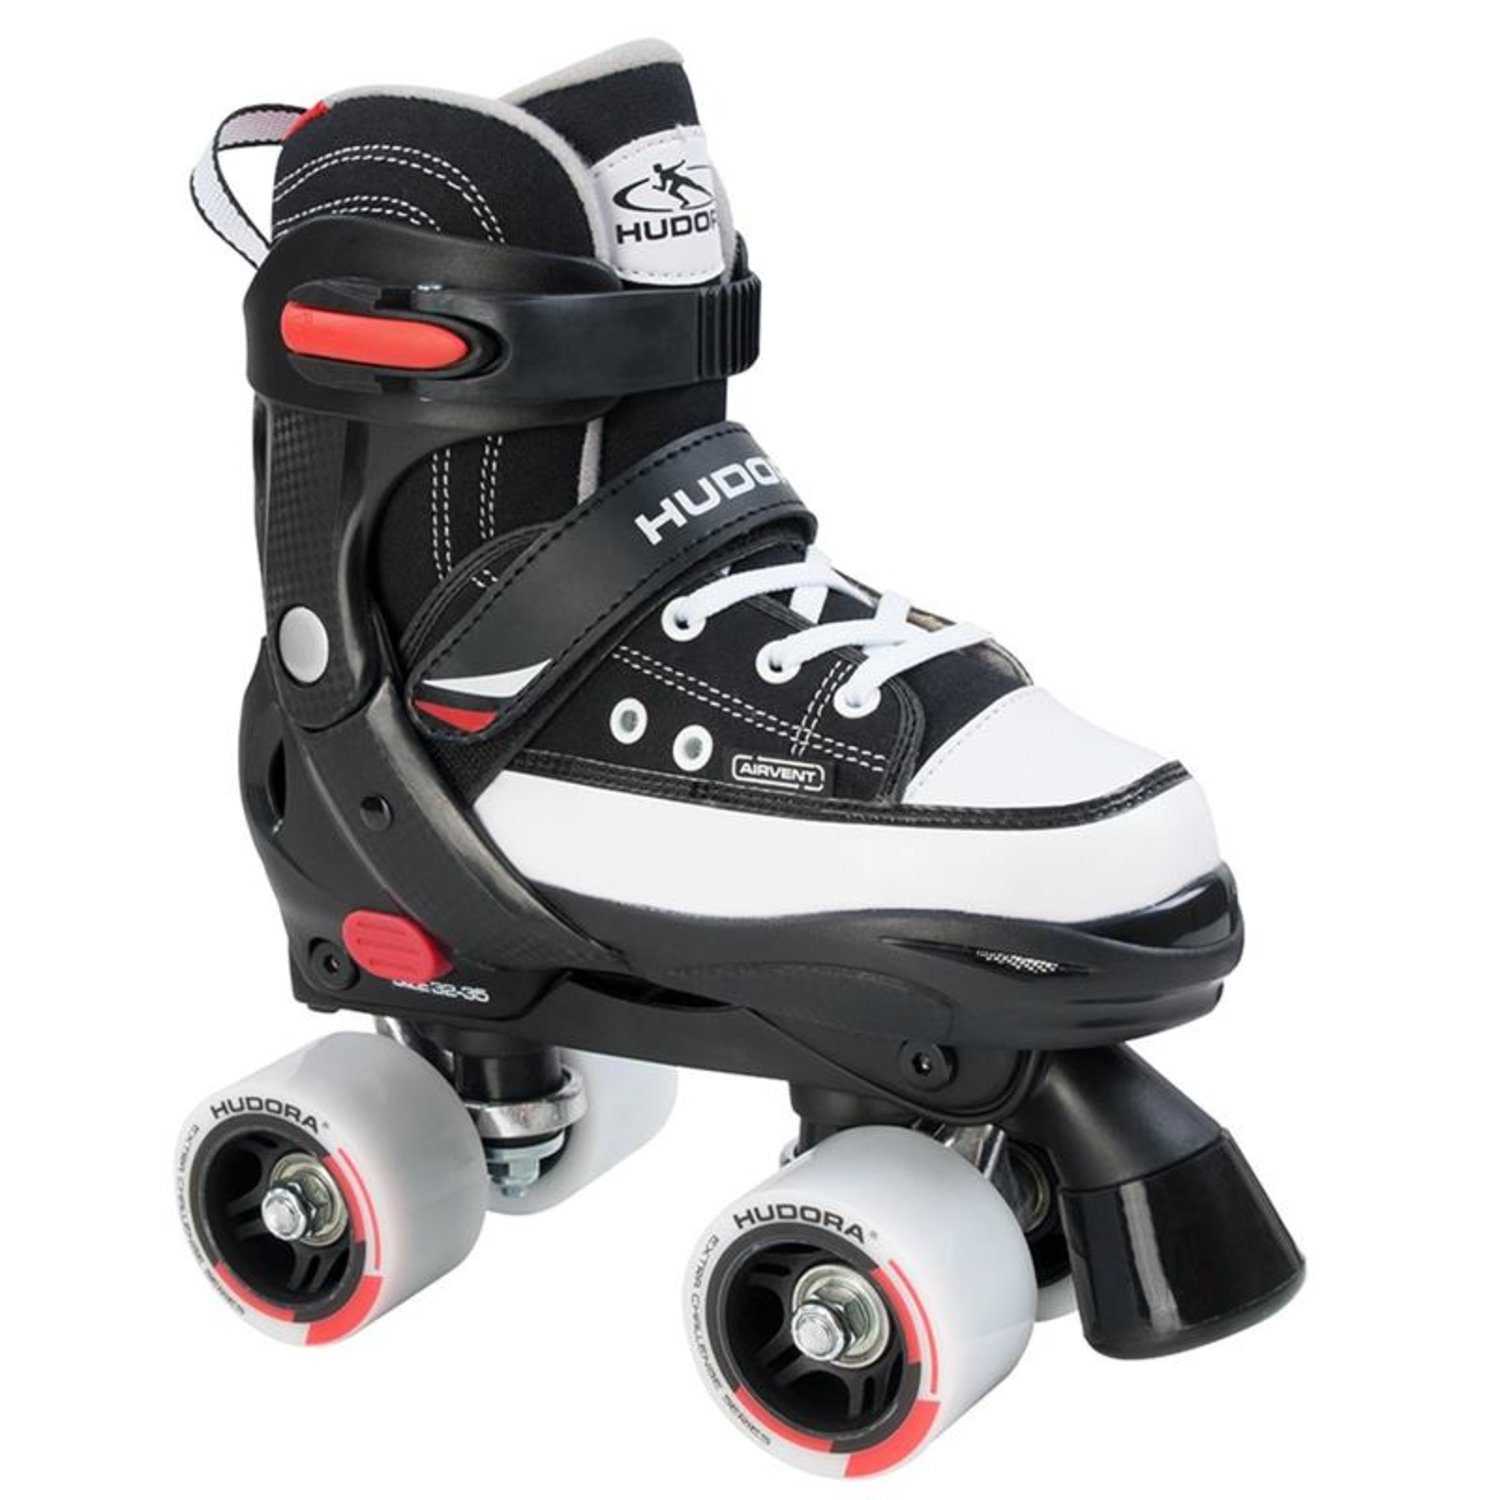 Hudora Inlineskates Größe 28-31 Skate, Roller 22030 verstellbar